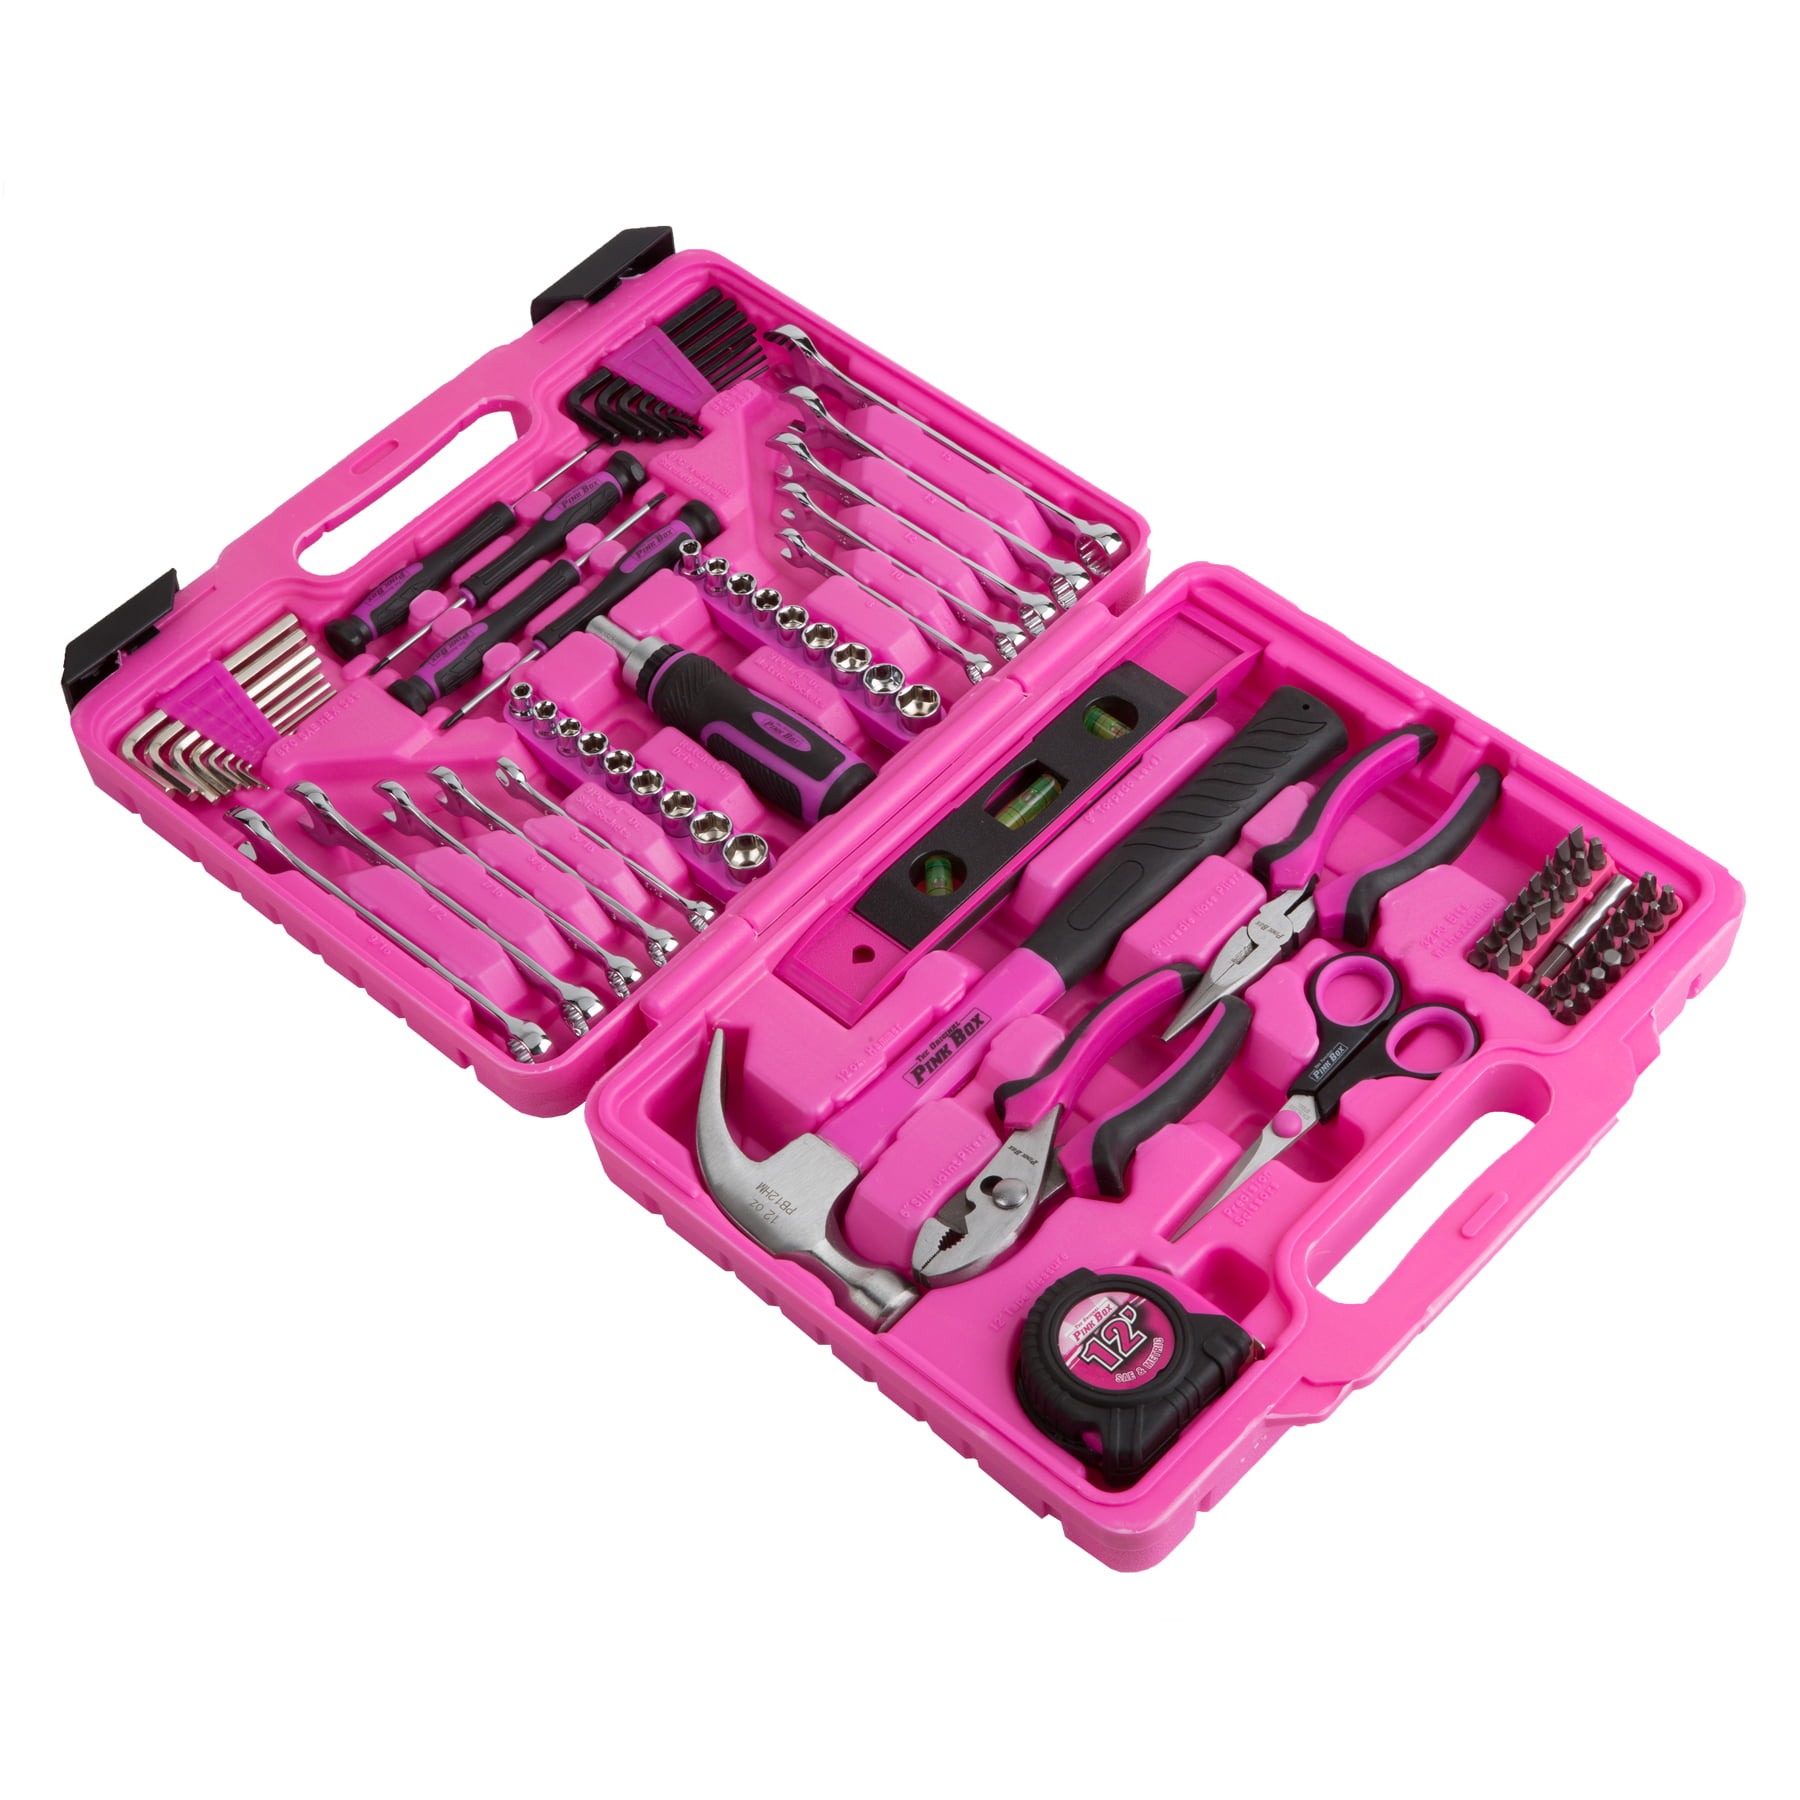 The Original Pink Box PB48HRK Household Tool Set Pink 94-Piece